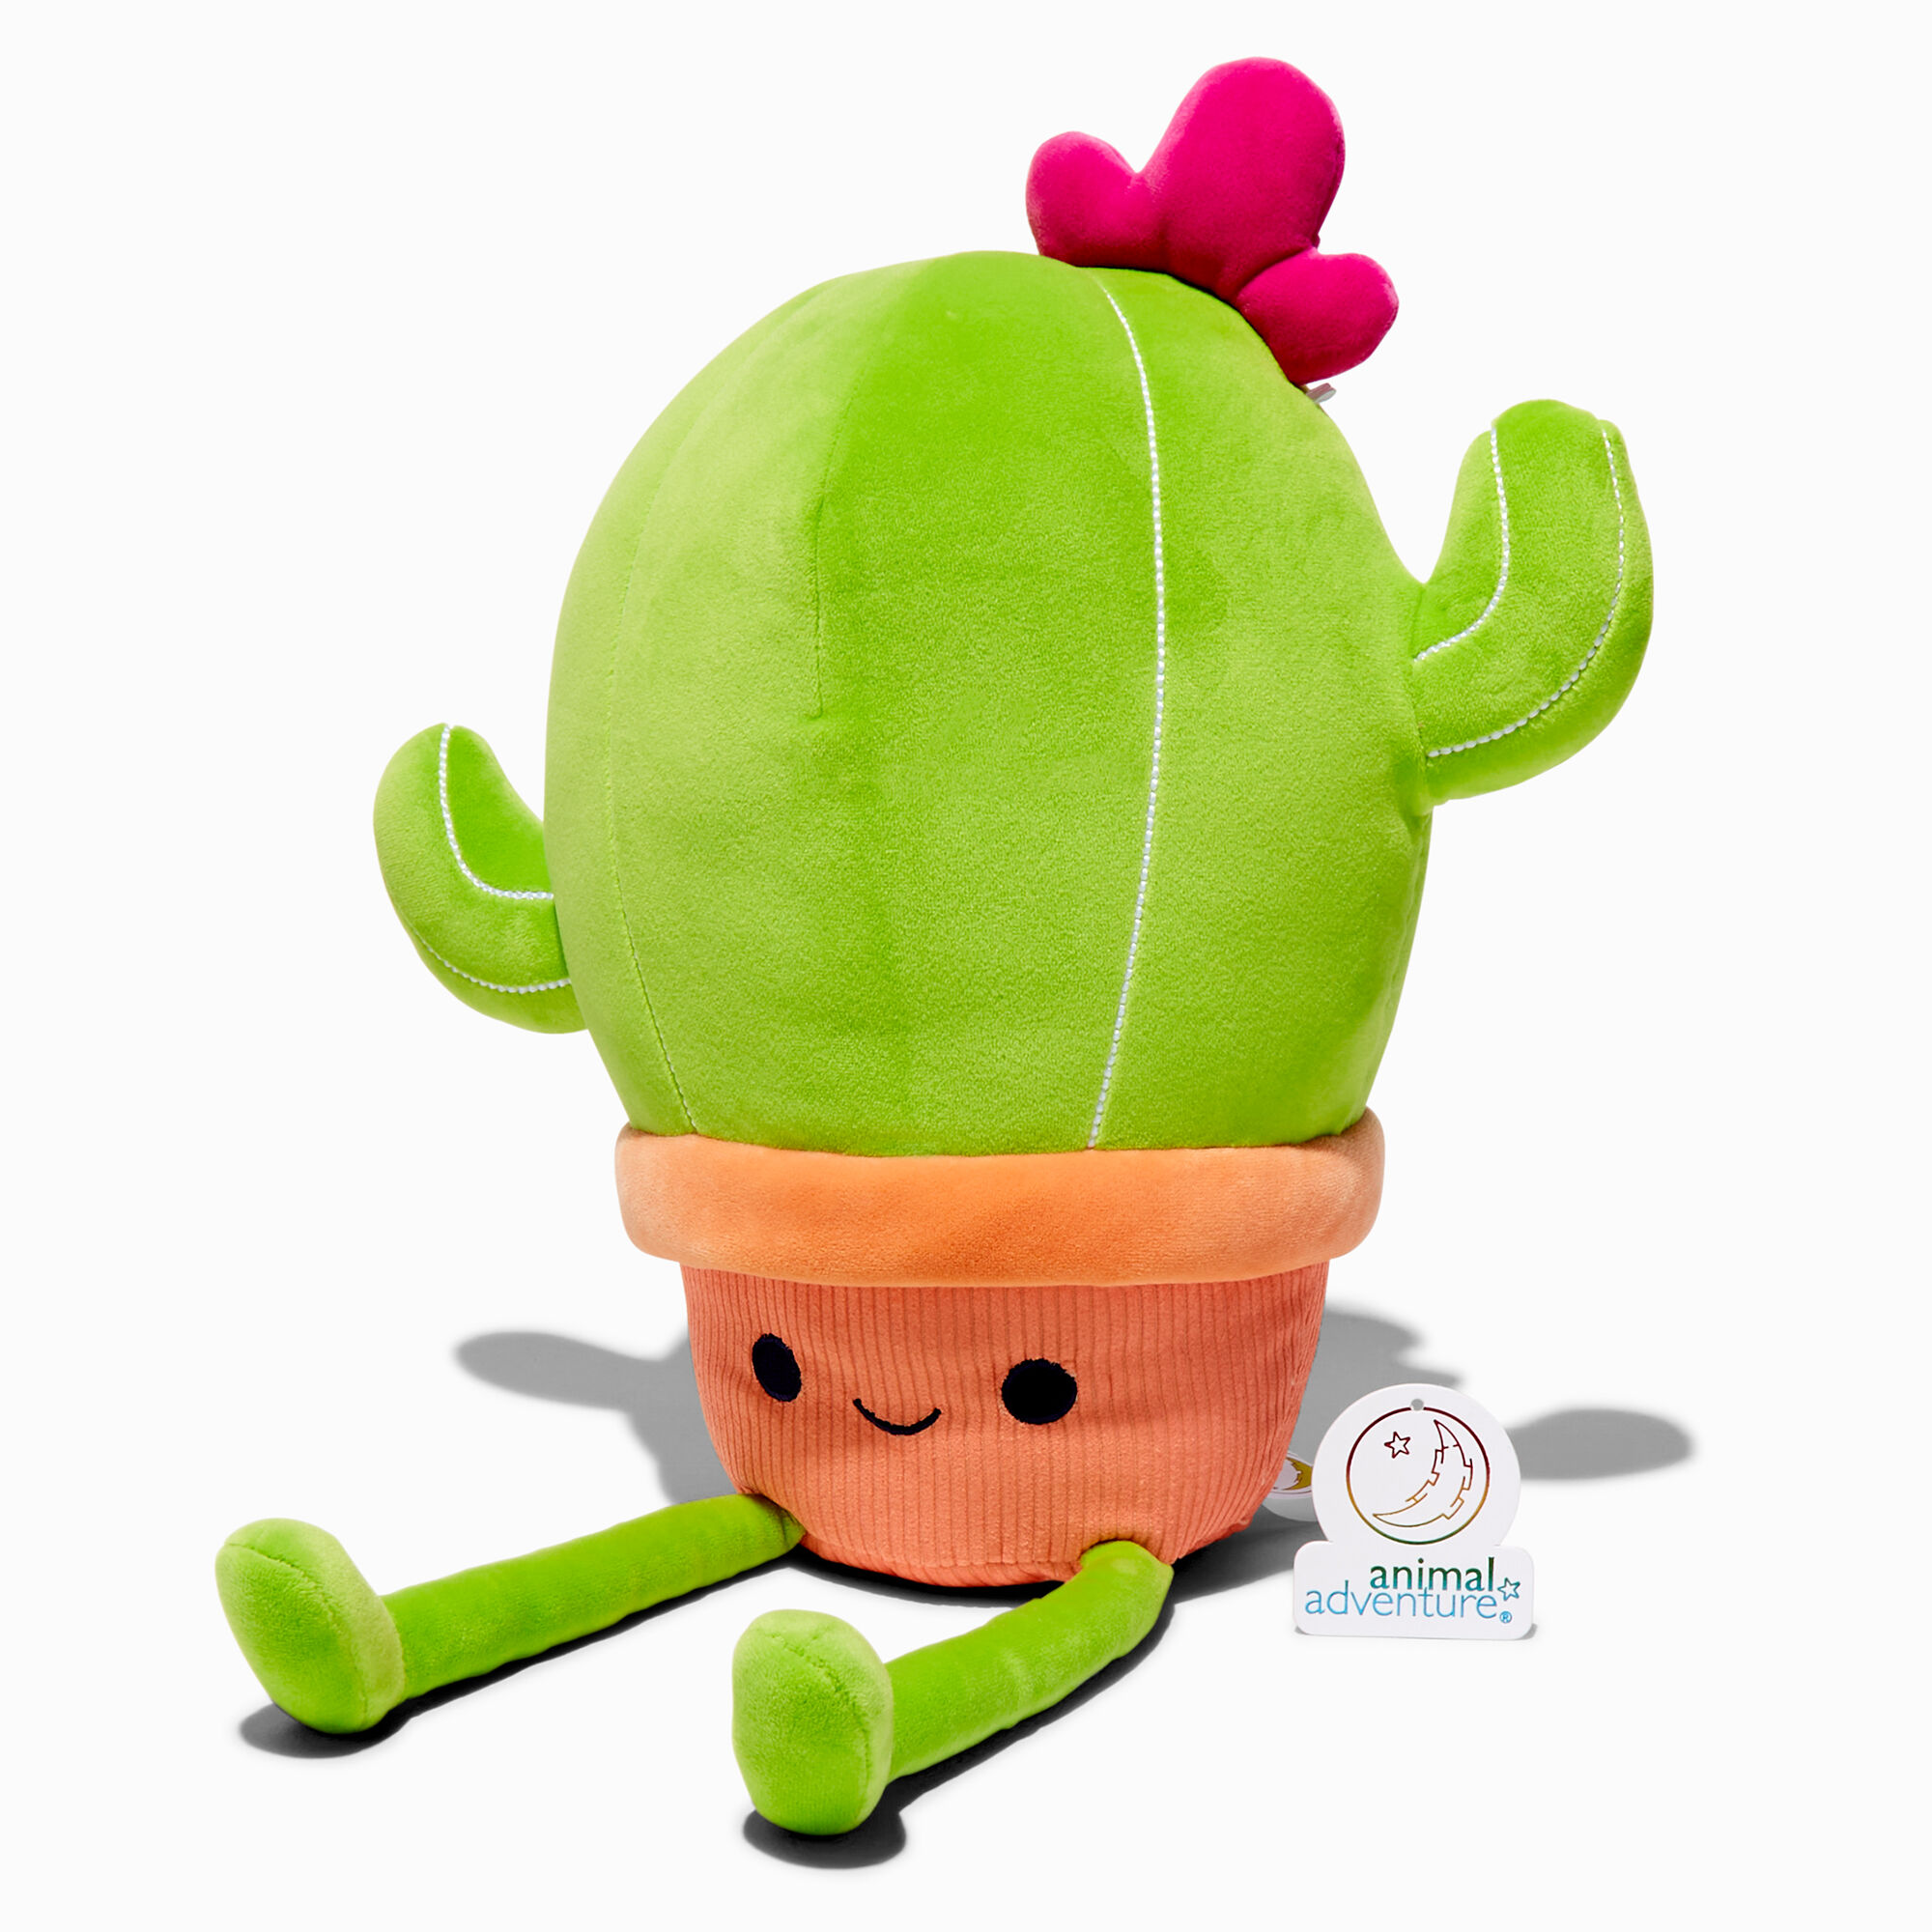 View Claires Animal Adventure Tween Icon Cactus Plush Toy information